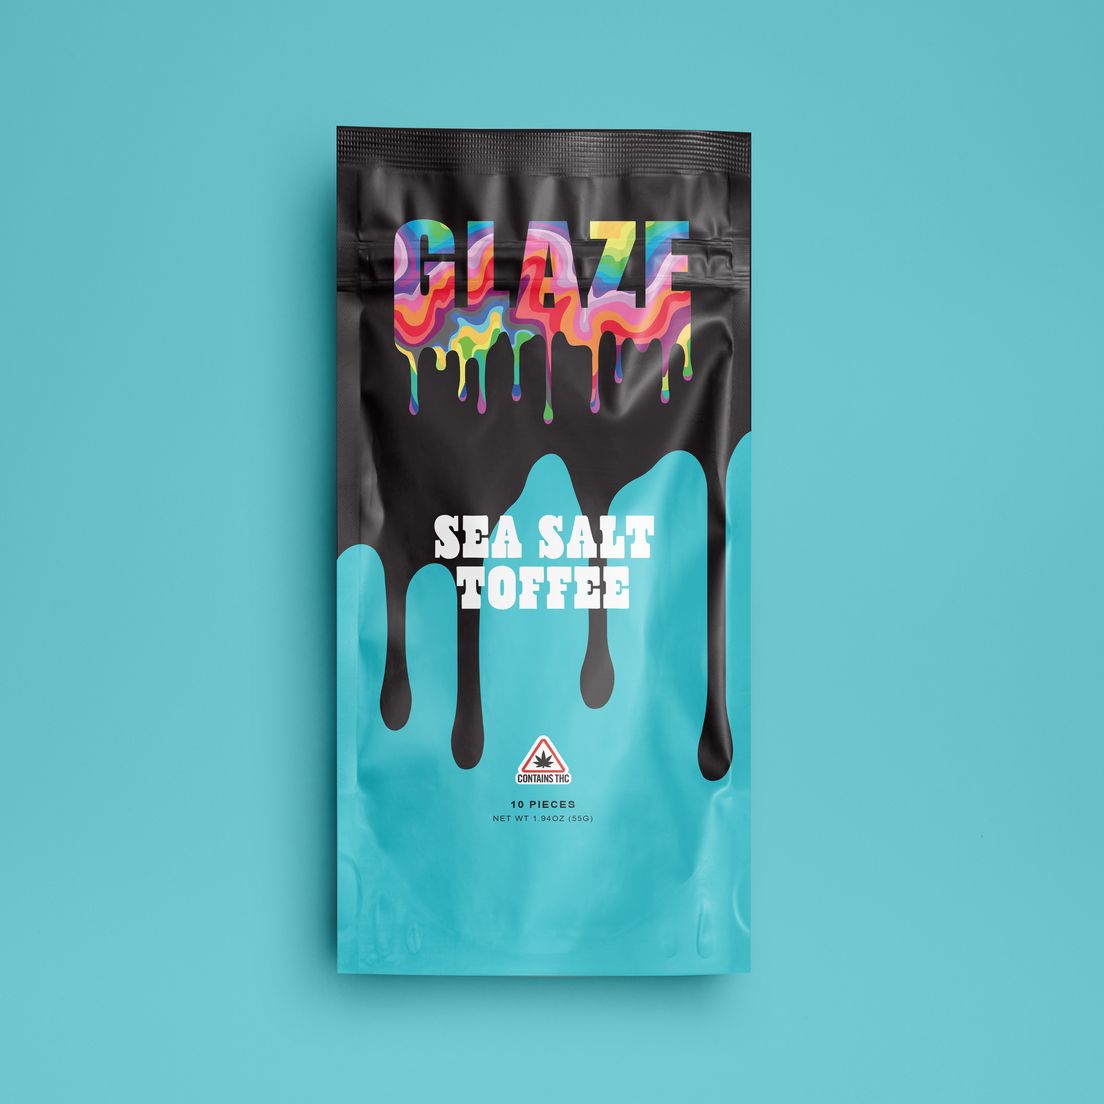 GLAZE Sea Salt Toffee Milk Chocolate Bar - 10mg square - 100mg total - 10 pcs